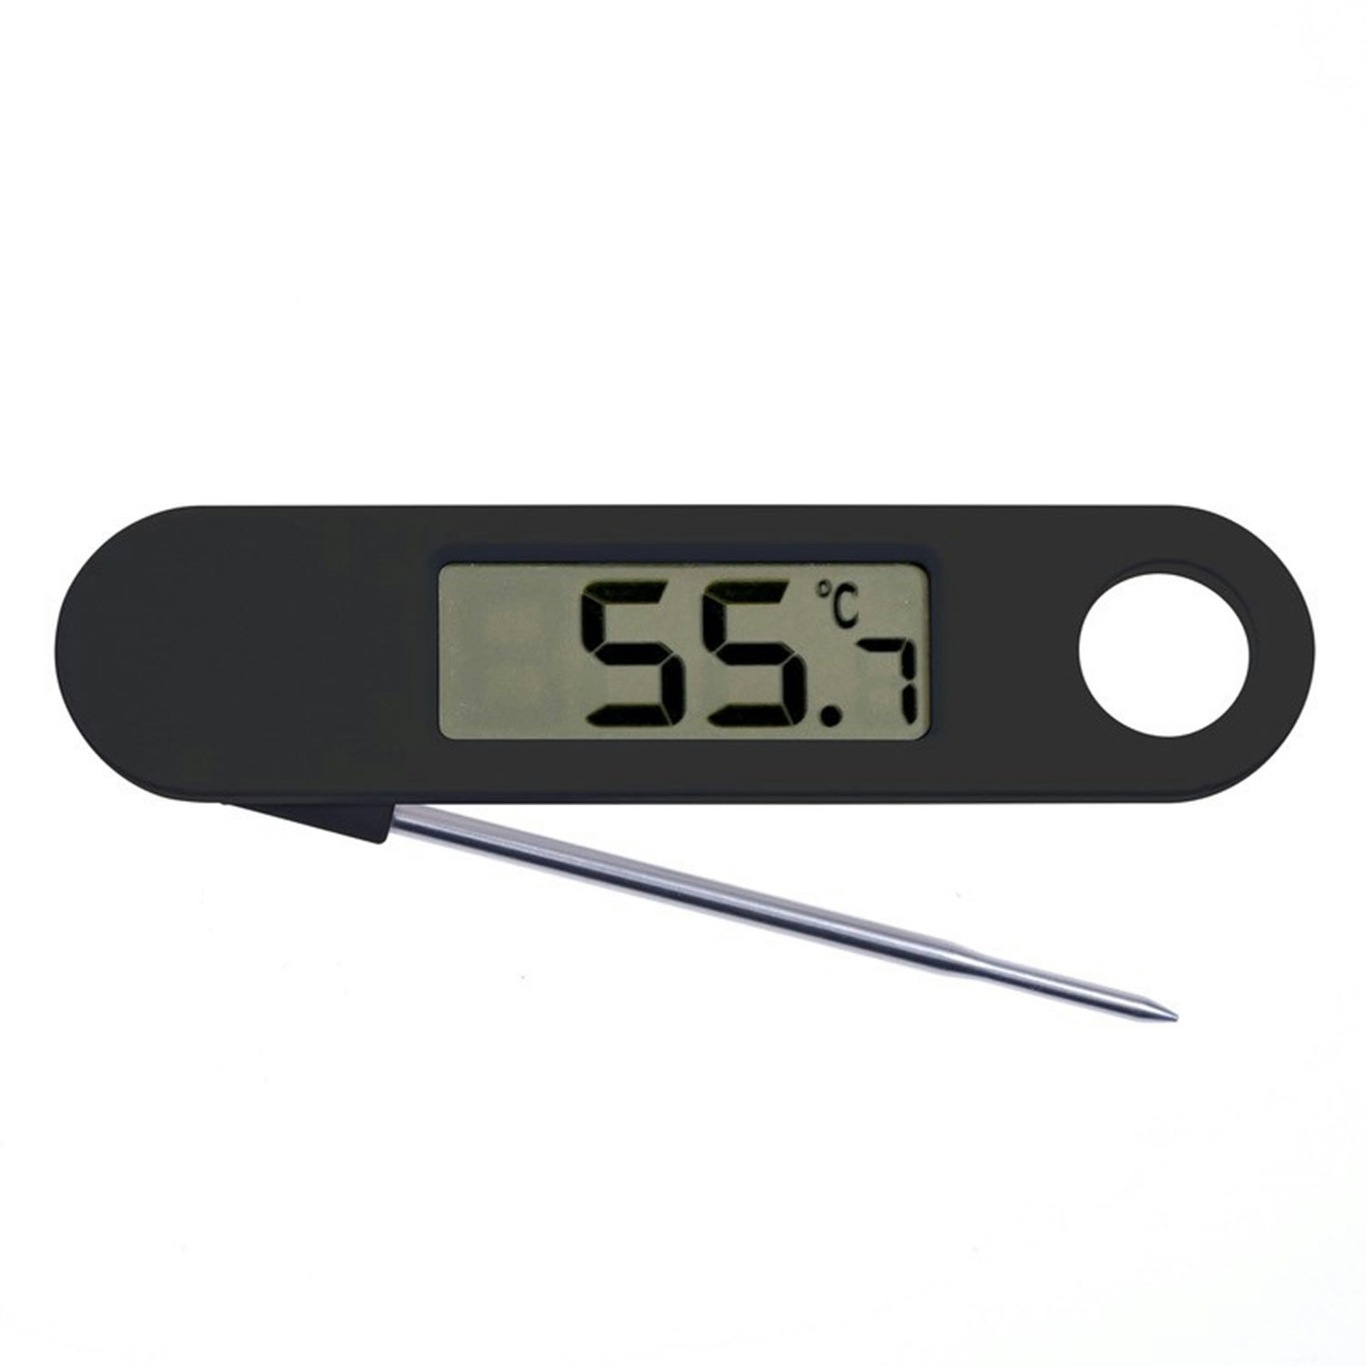 https://royaldesign.com/image/2/bengt-ek-design-universal-thermometer-0-250c-1?w=800&quality=80